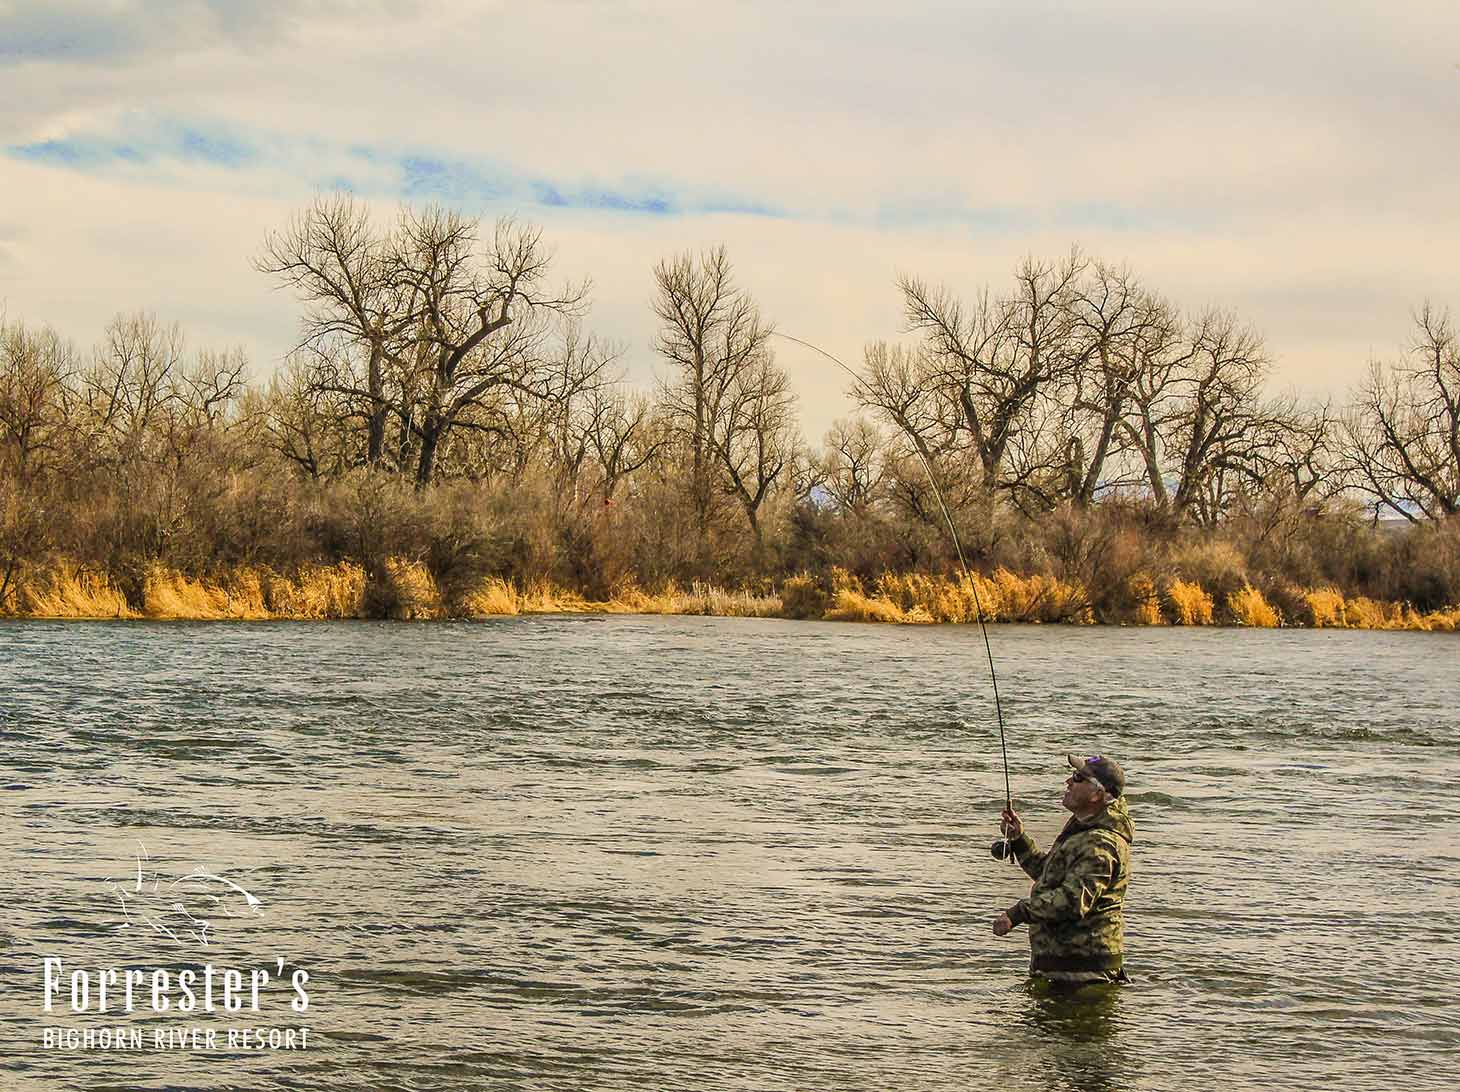 Big Horn River Fishing Report, Fly fishing Montana, Fly fishing on the Bighorn River, Montana Fly Fishing, Montana Lodging, Montana, Fly fishing